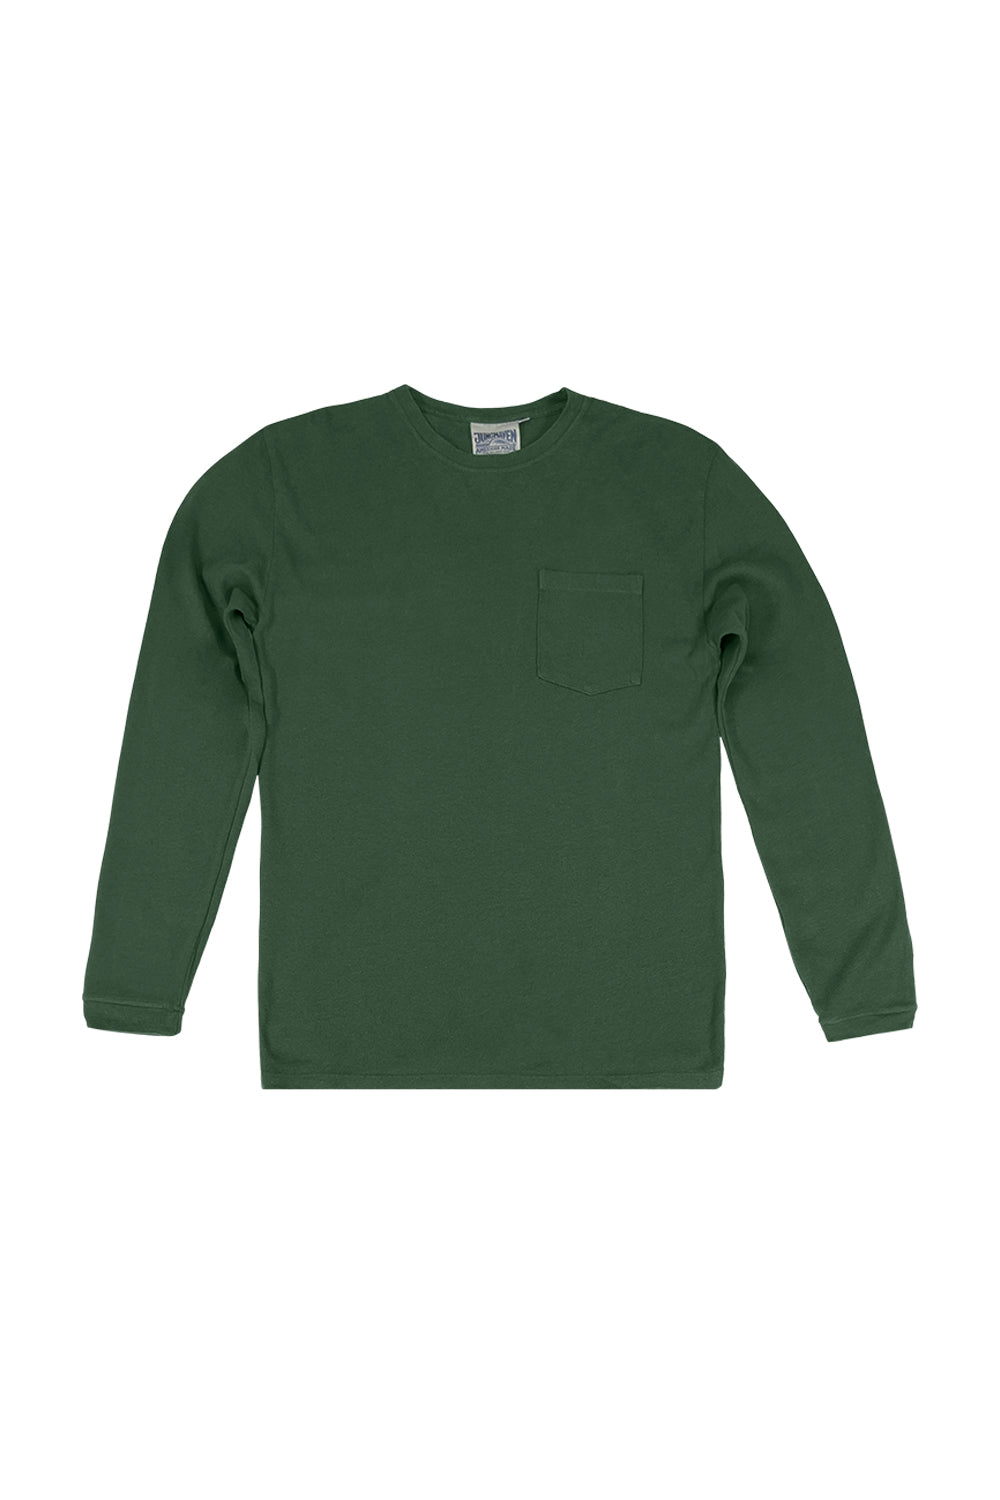 Baja Long Sleeve Pocket Tee | Jungmaven Hemp Clothing & Accessories / Color: Hunter Green